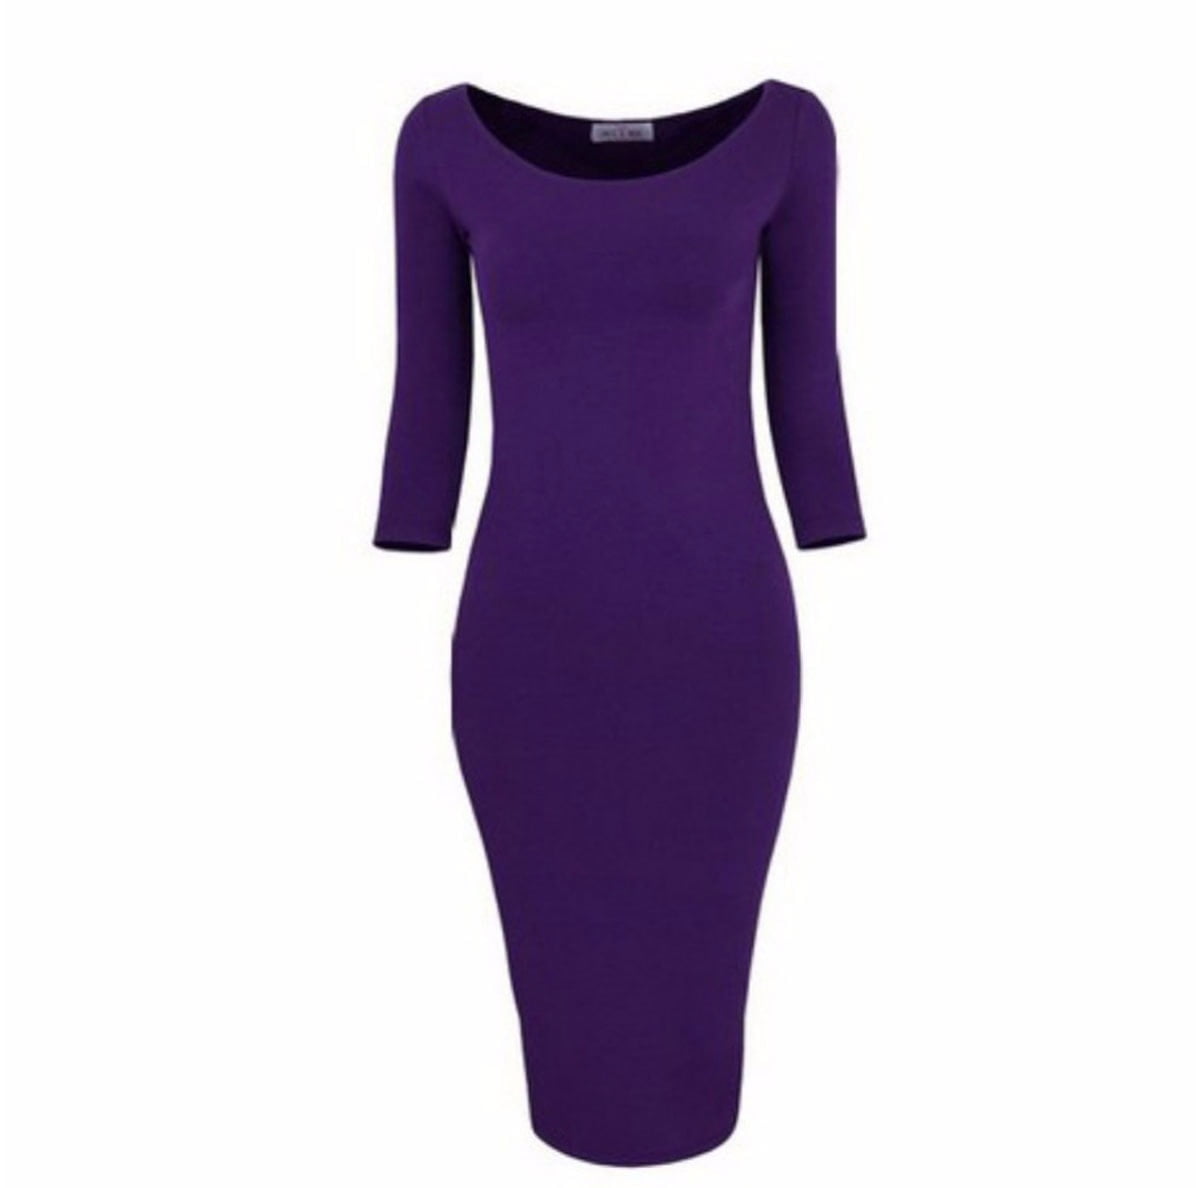 M0172 purple1 Long Sleeve Dresses maureens.com boutique